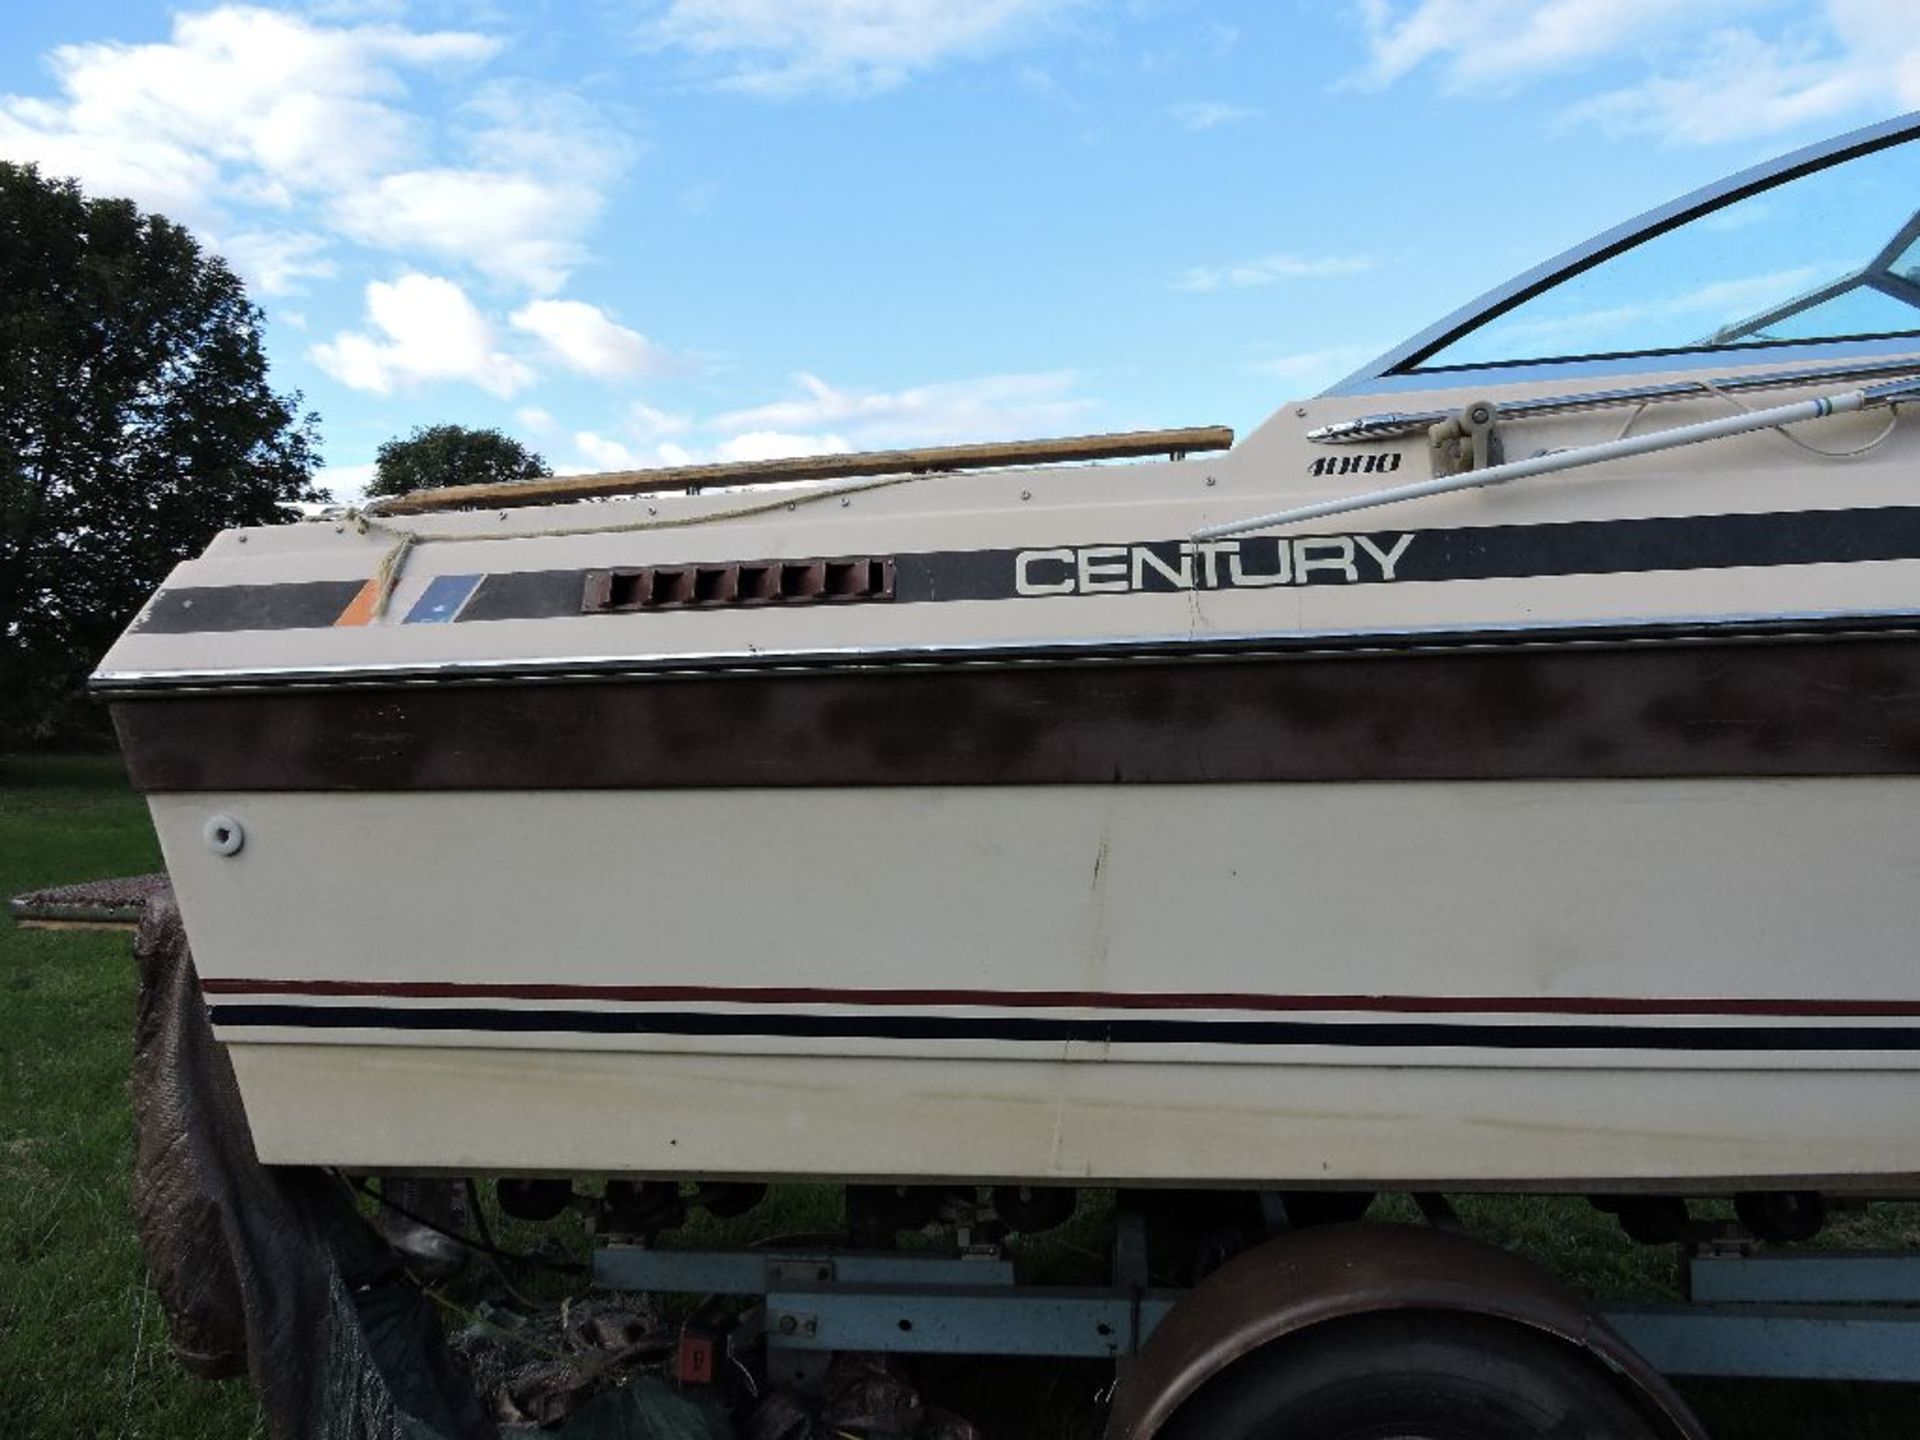 Century 4000 boat, 20', Mercury Cruiser motor, Easy Load trailer. - Image 2 of 4